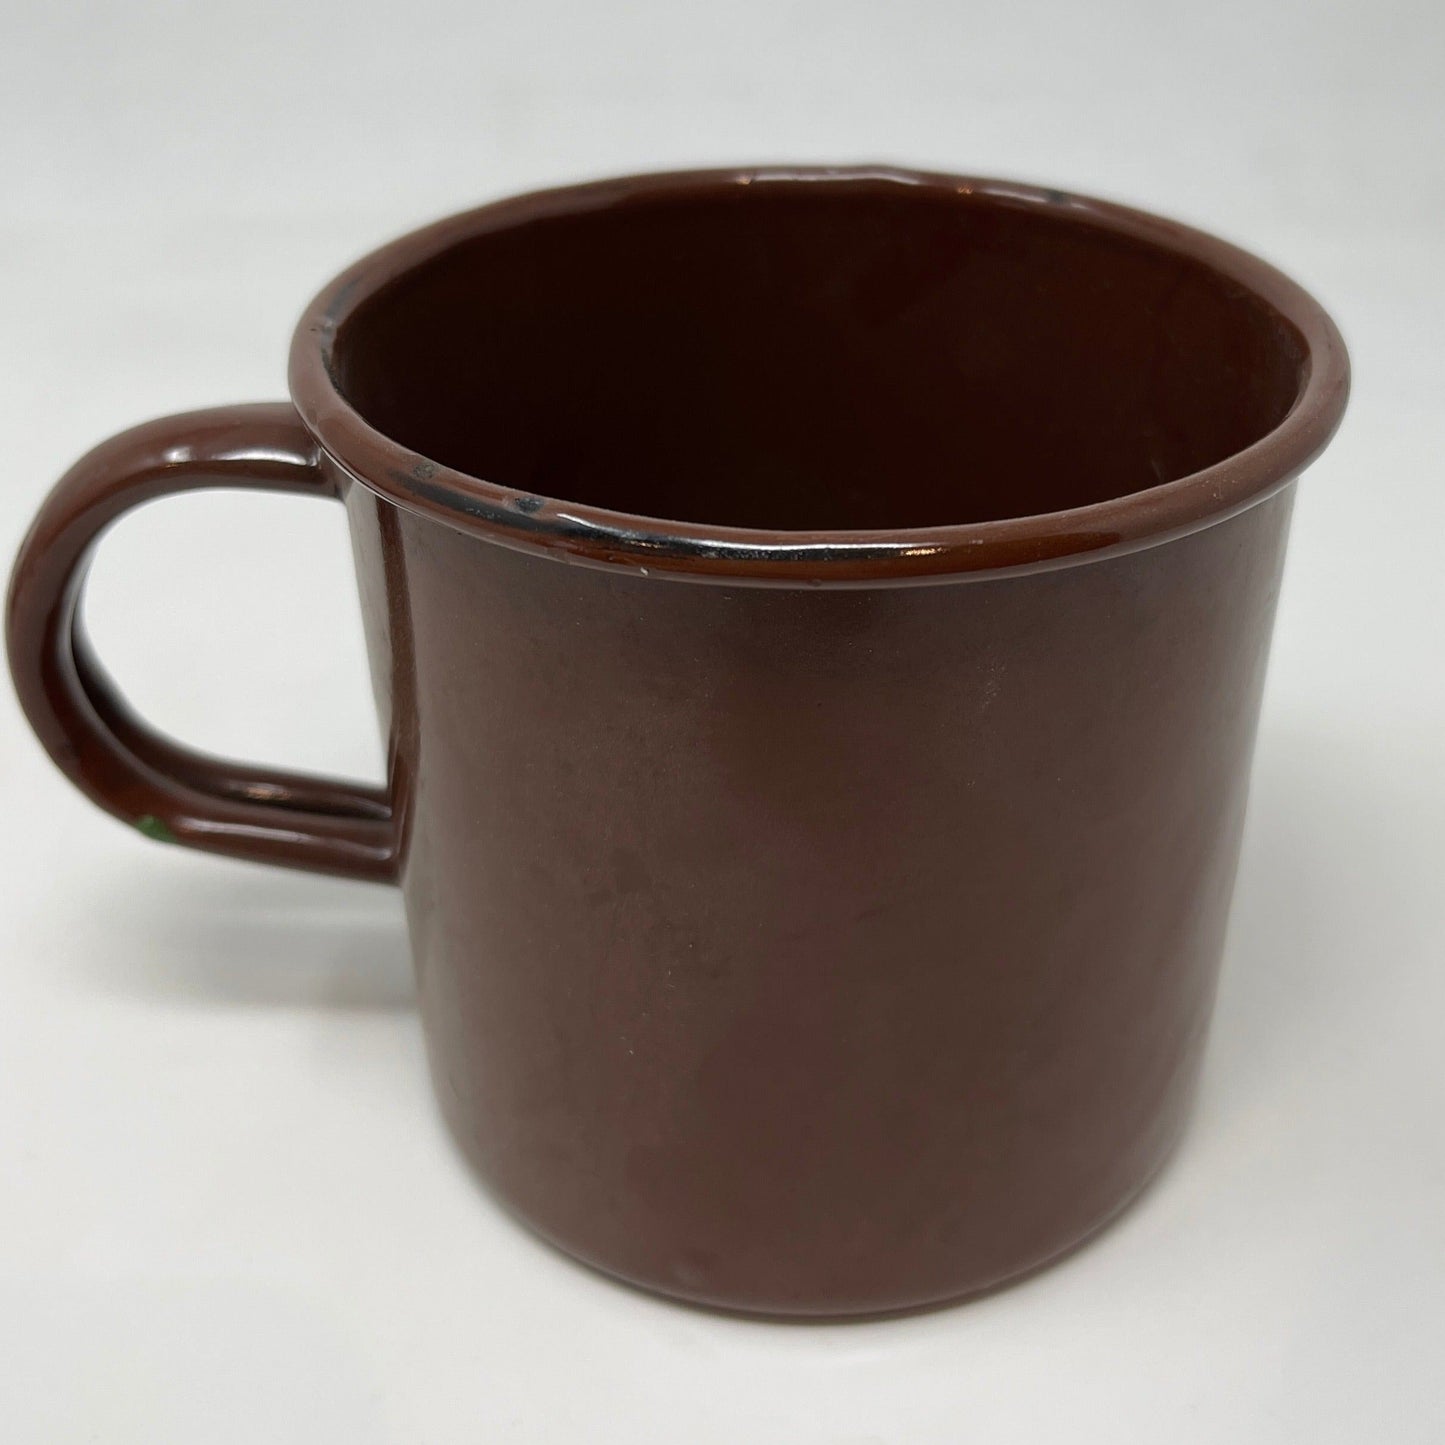 British Army Brown Mug 1950's dated